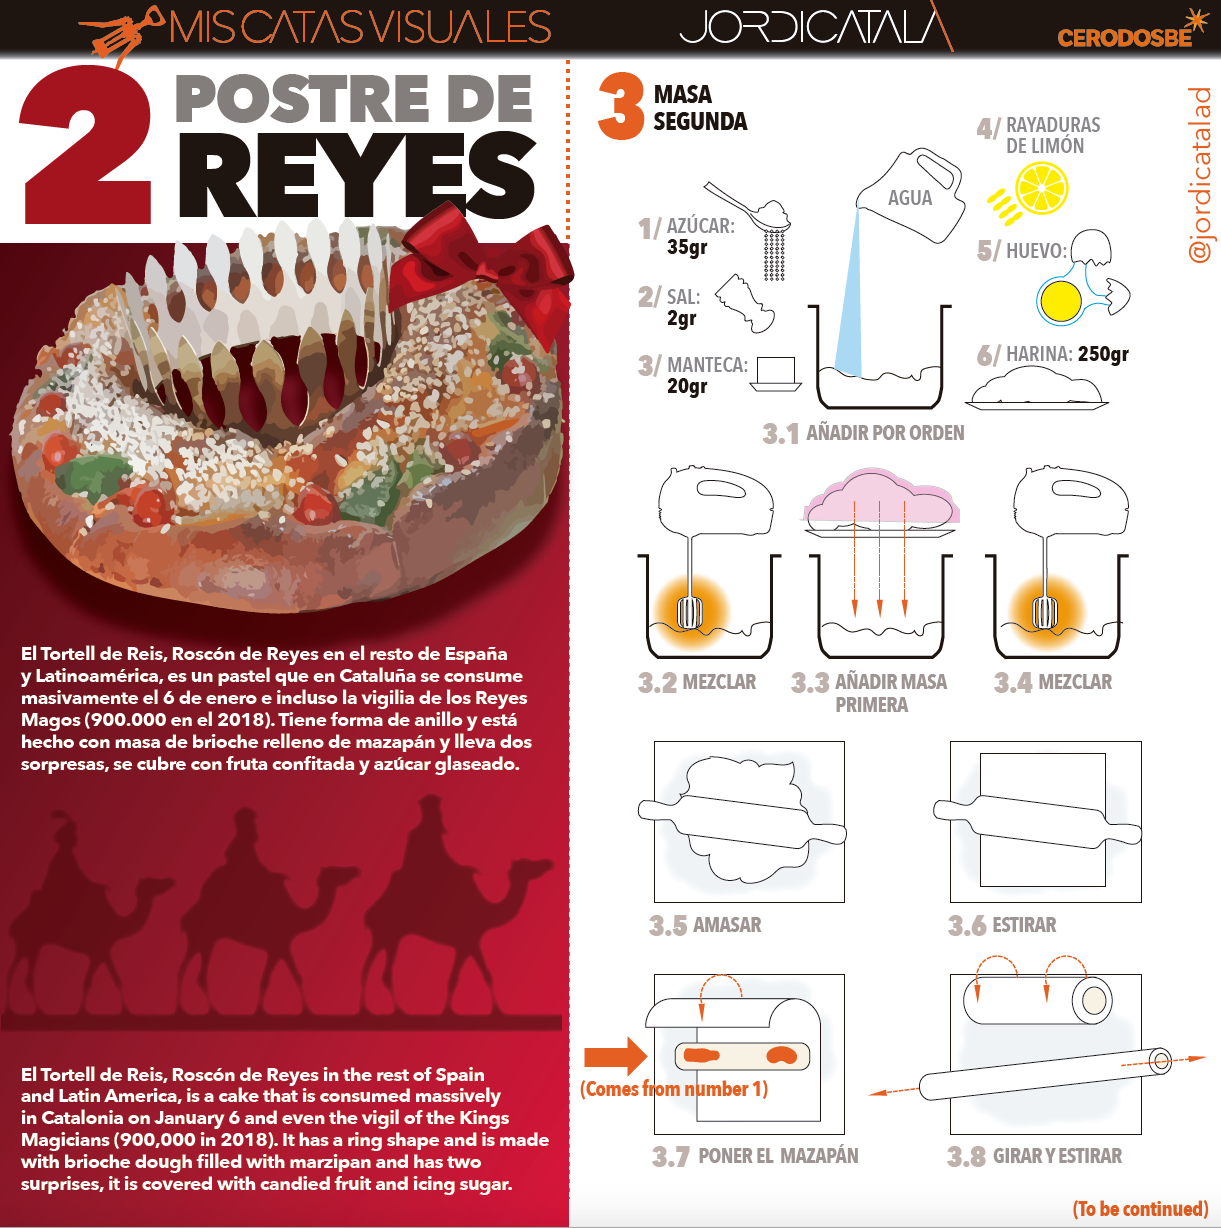 Info 2: Postre de Reyes